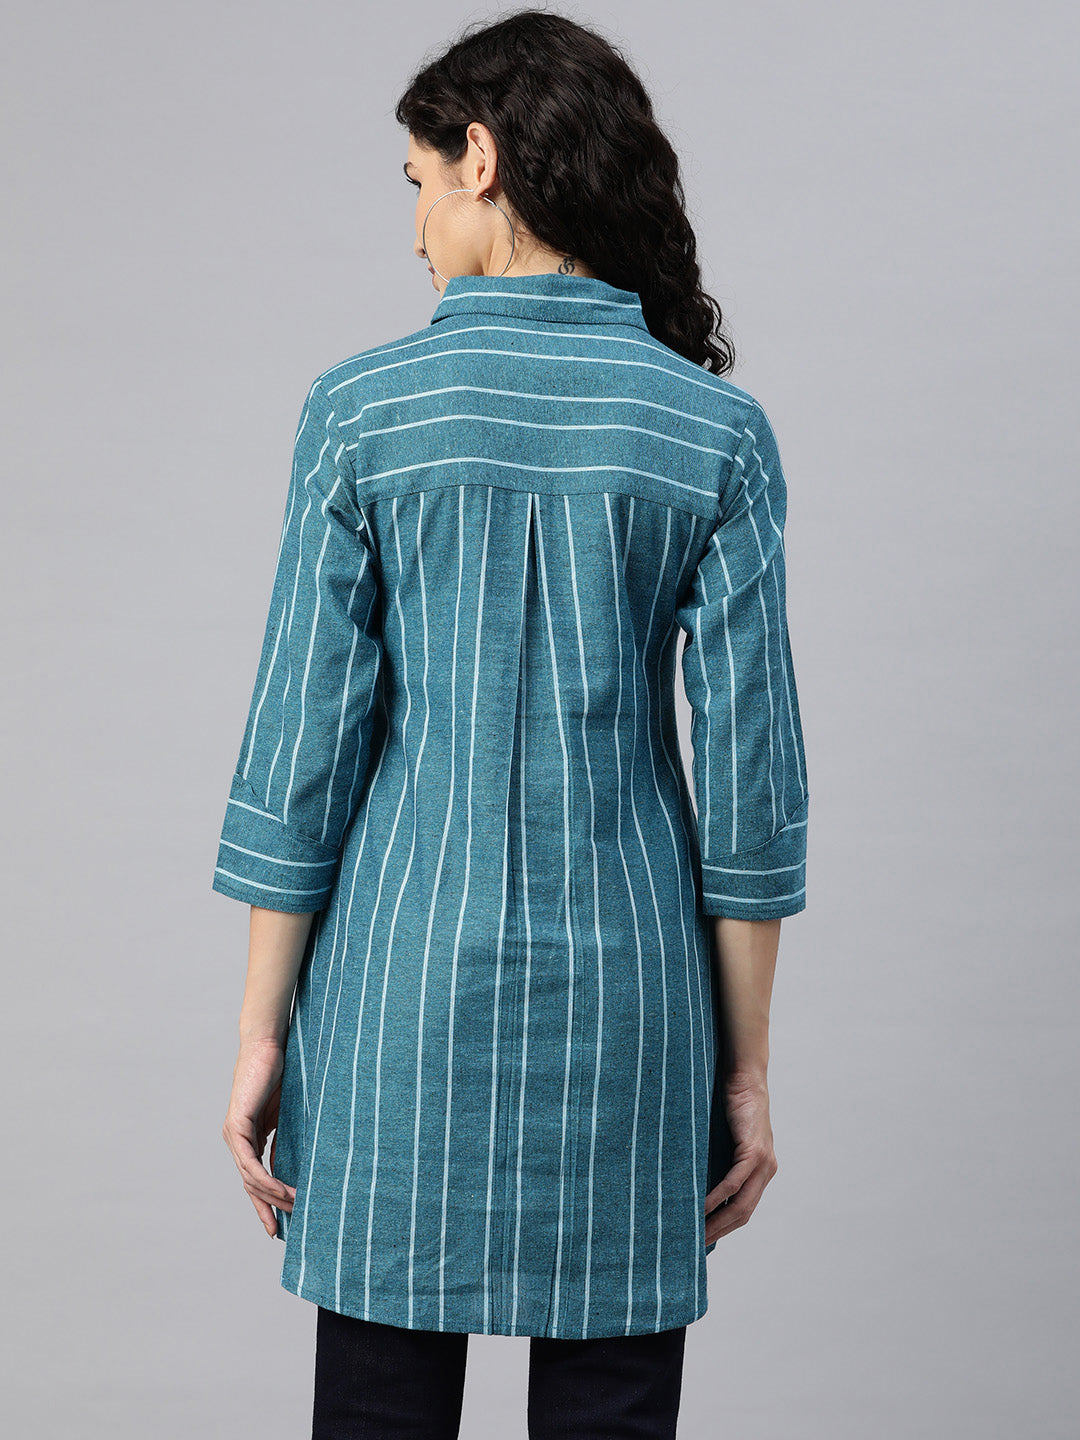 Cotinfab Women Striped Shirt Style Cotton Top